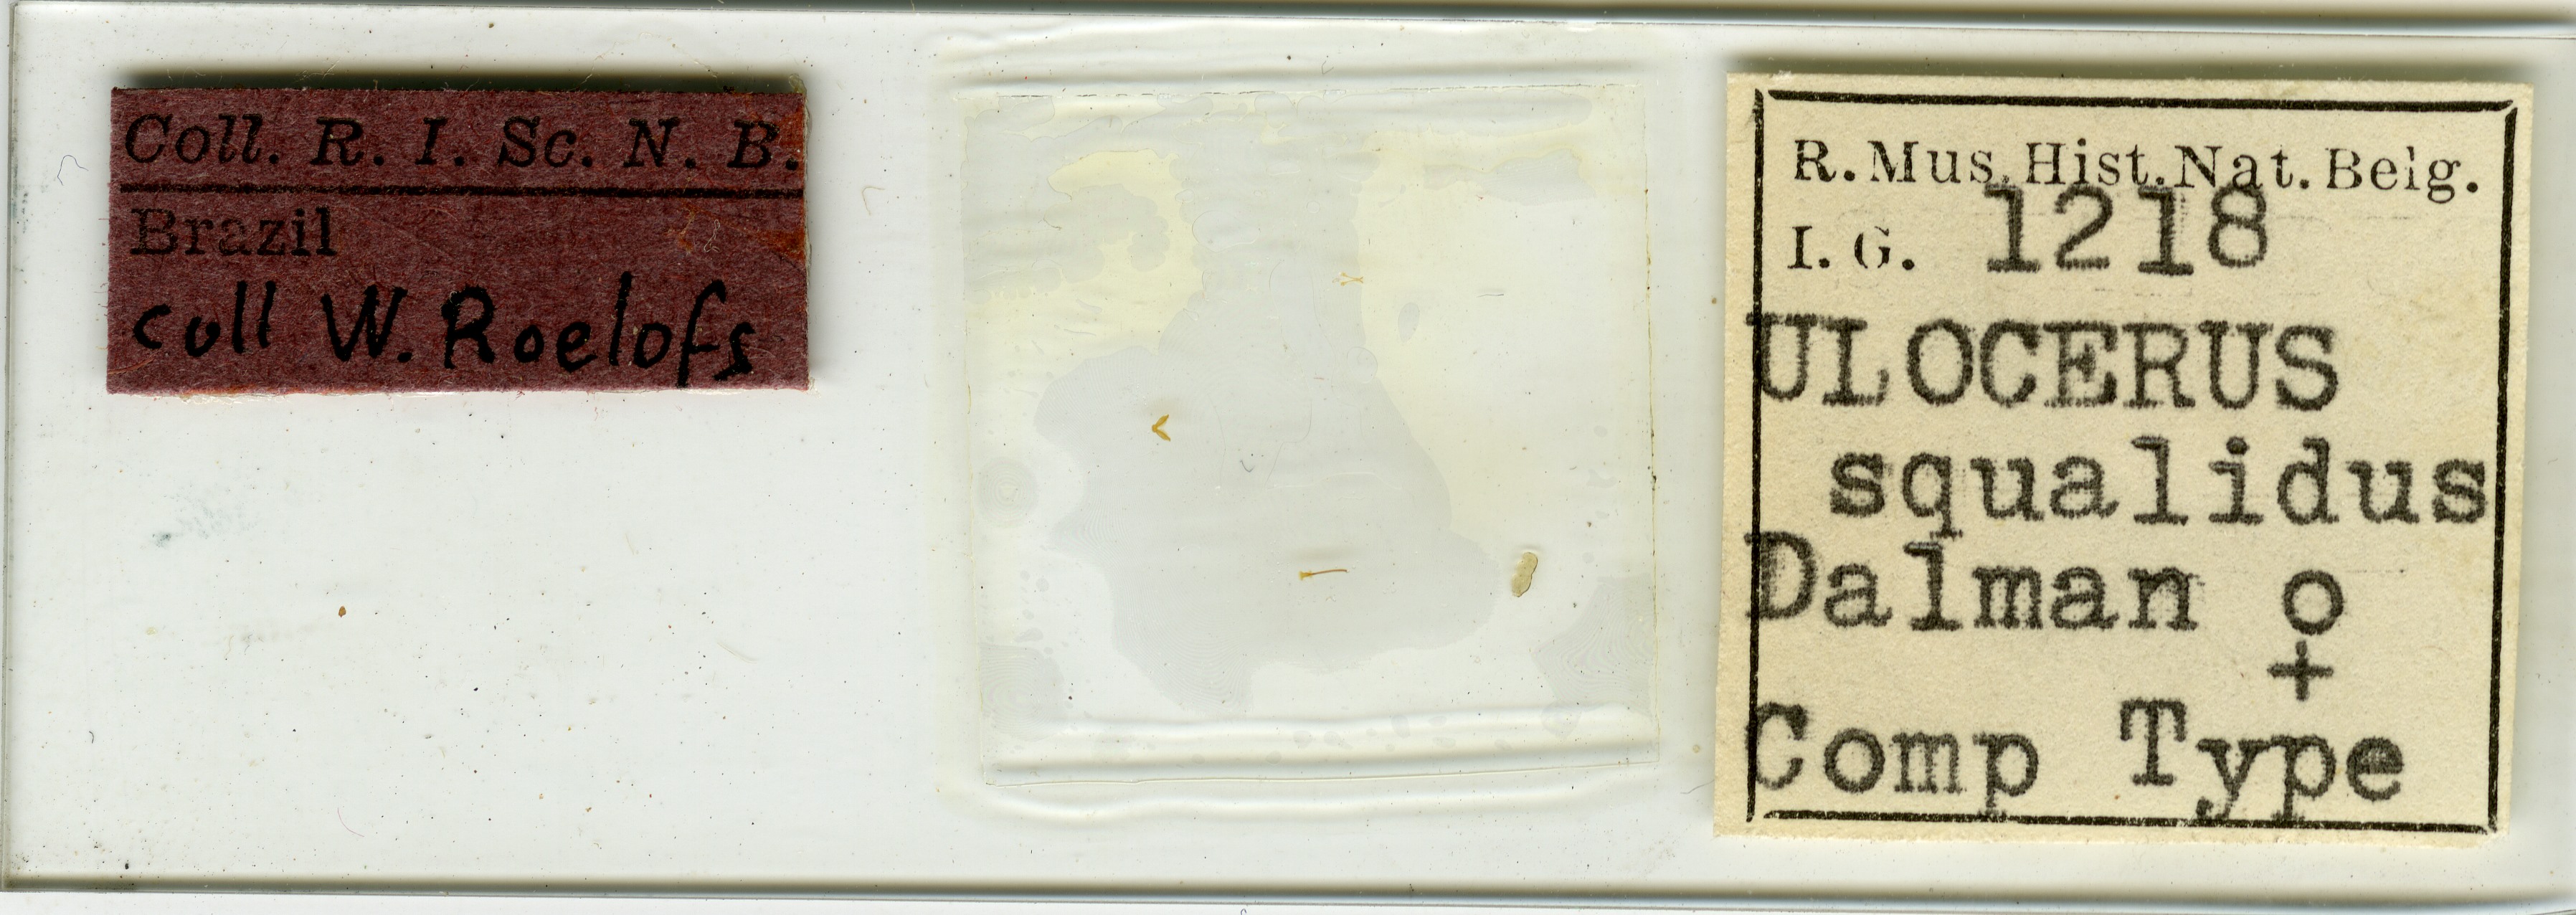 Ulocerus squalidus cotype Microscopic preparation.jpg